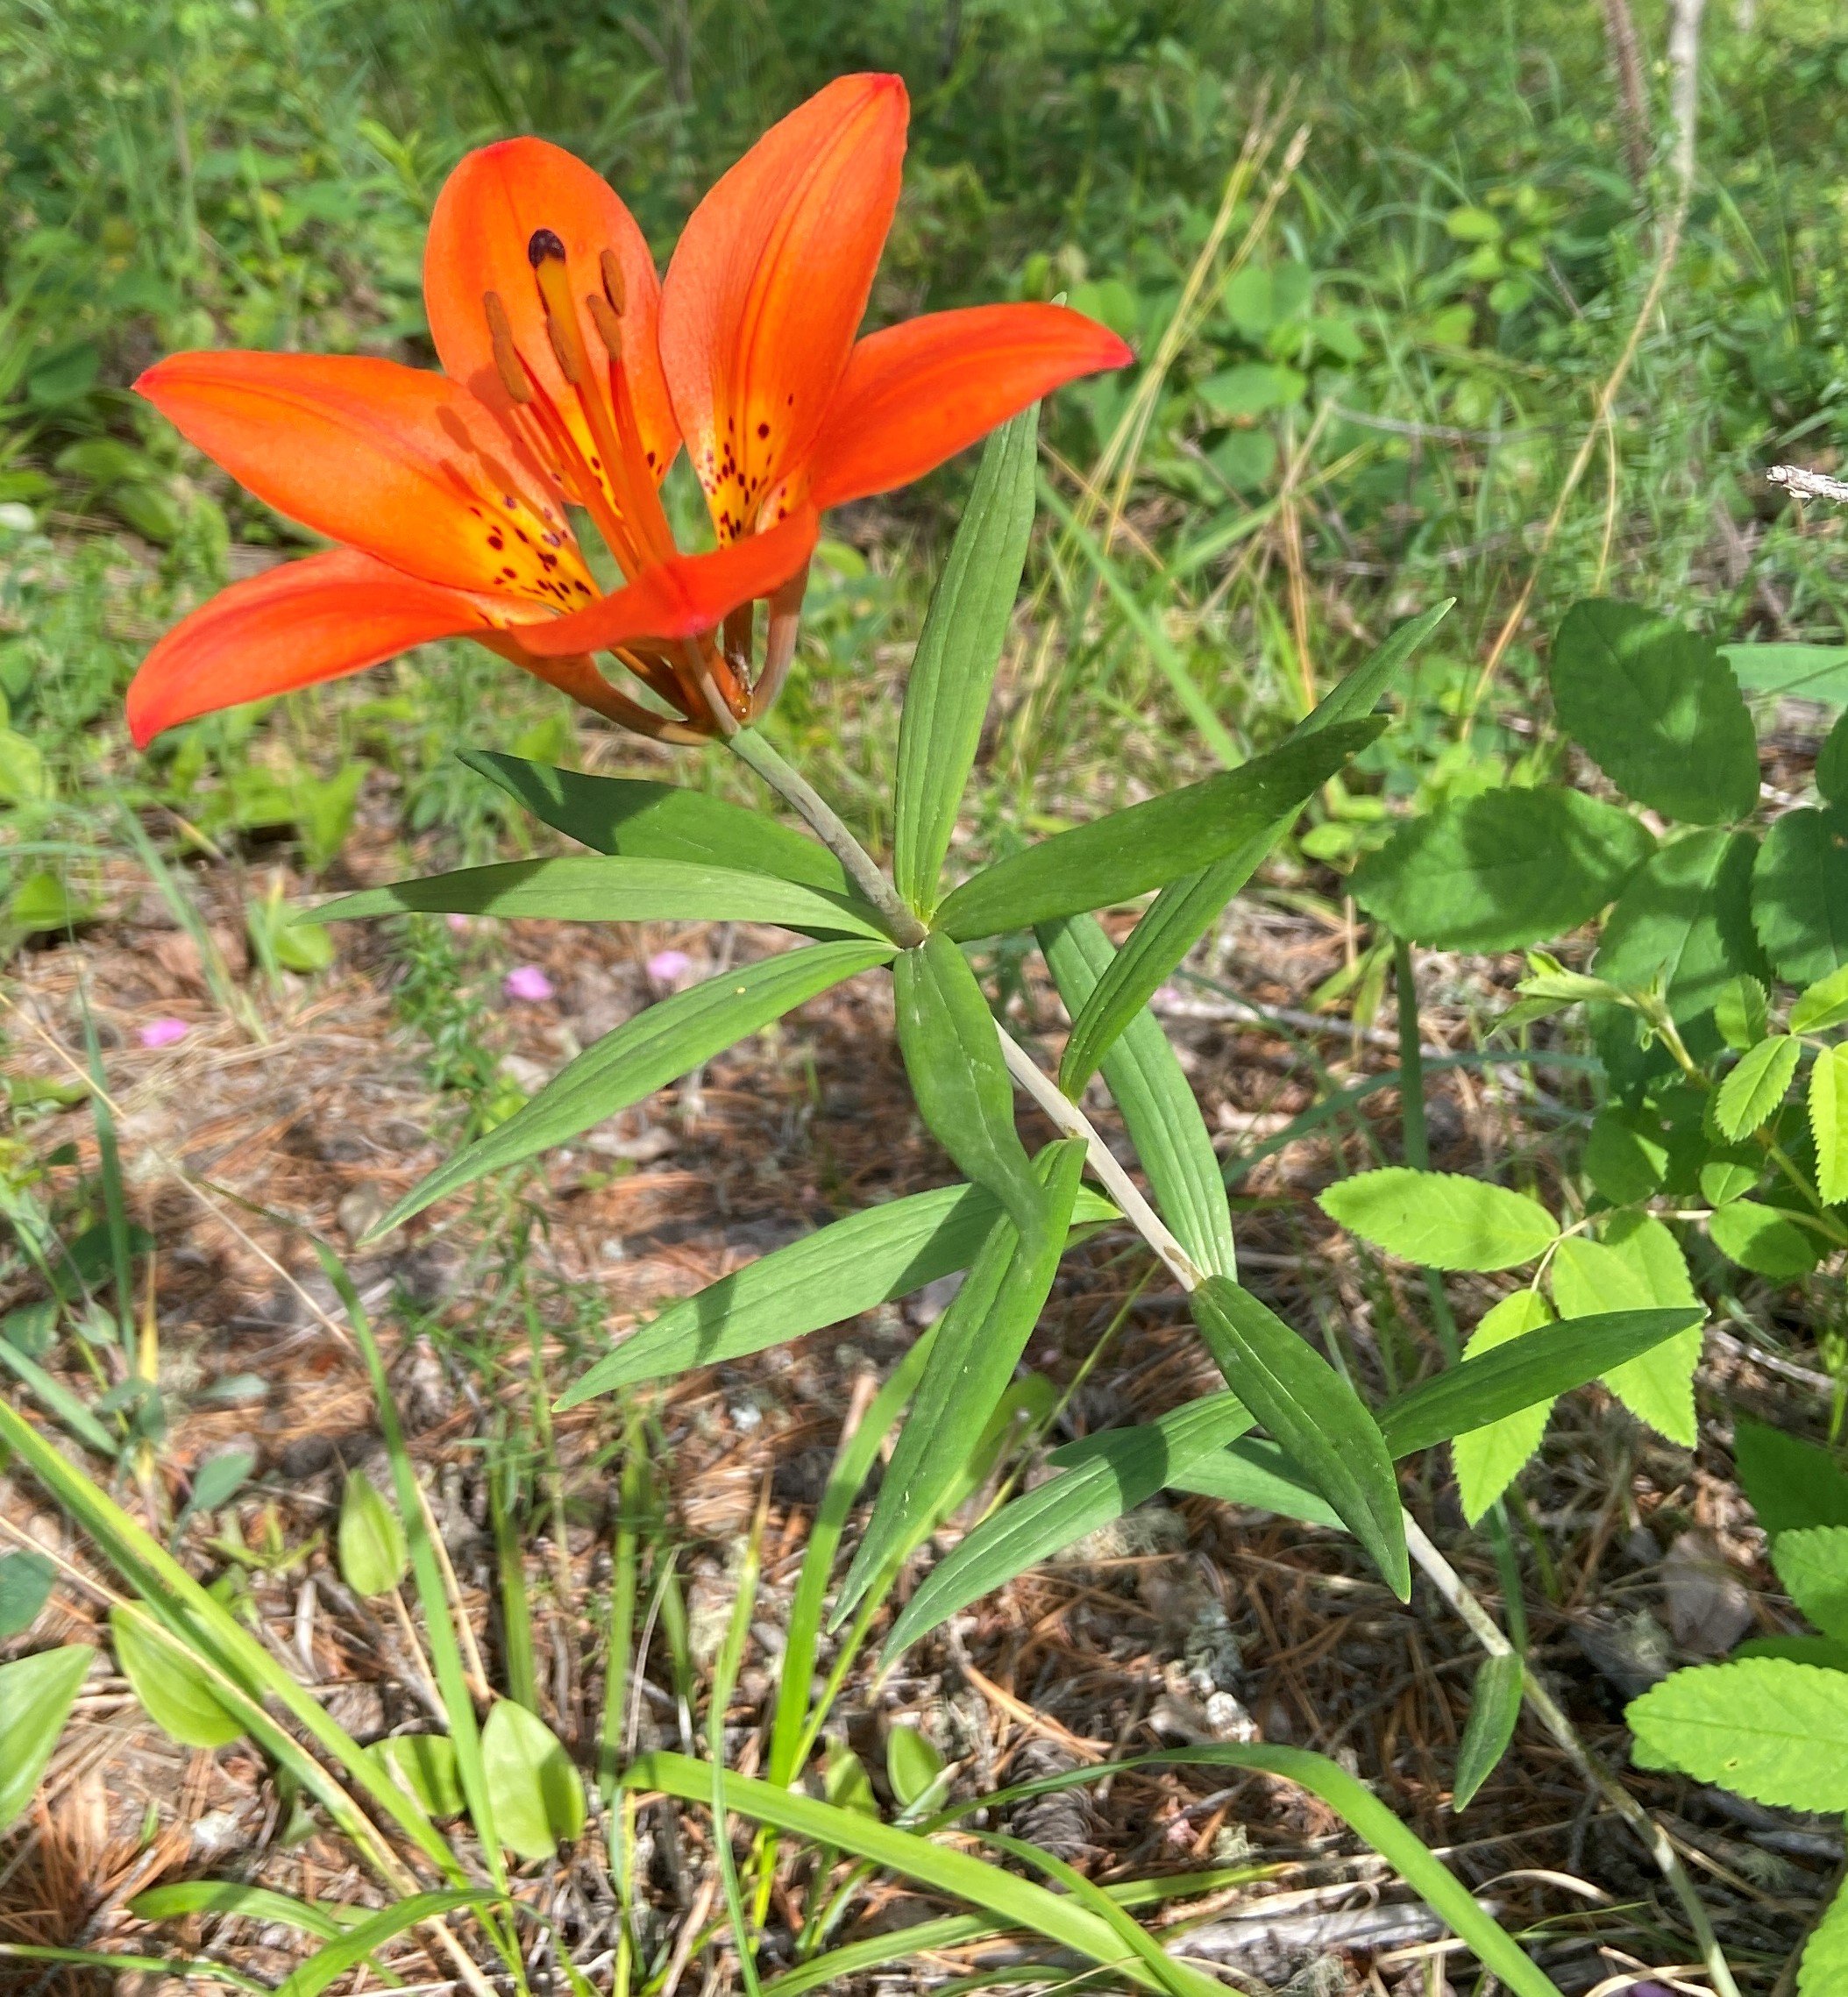 Wood lily (Lilium philadelphicum)